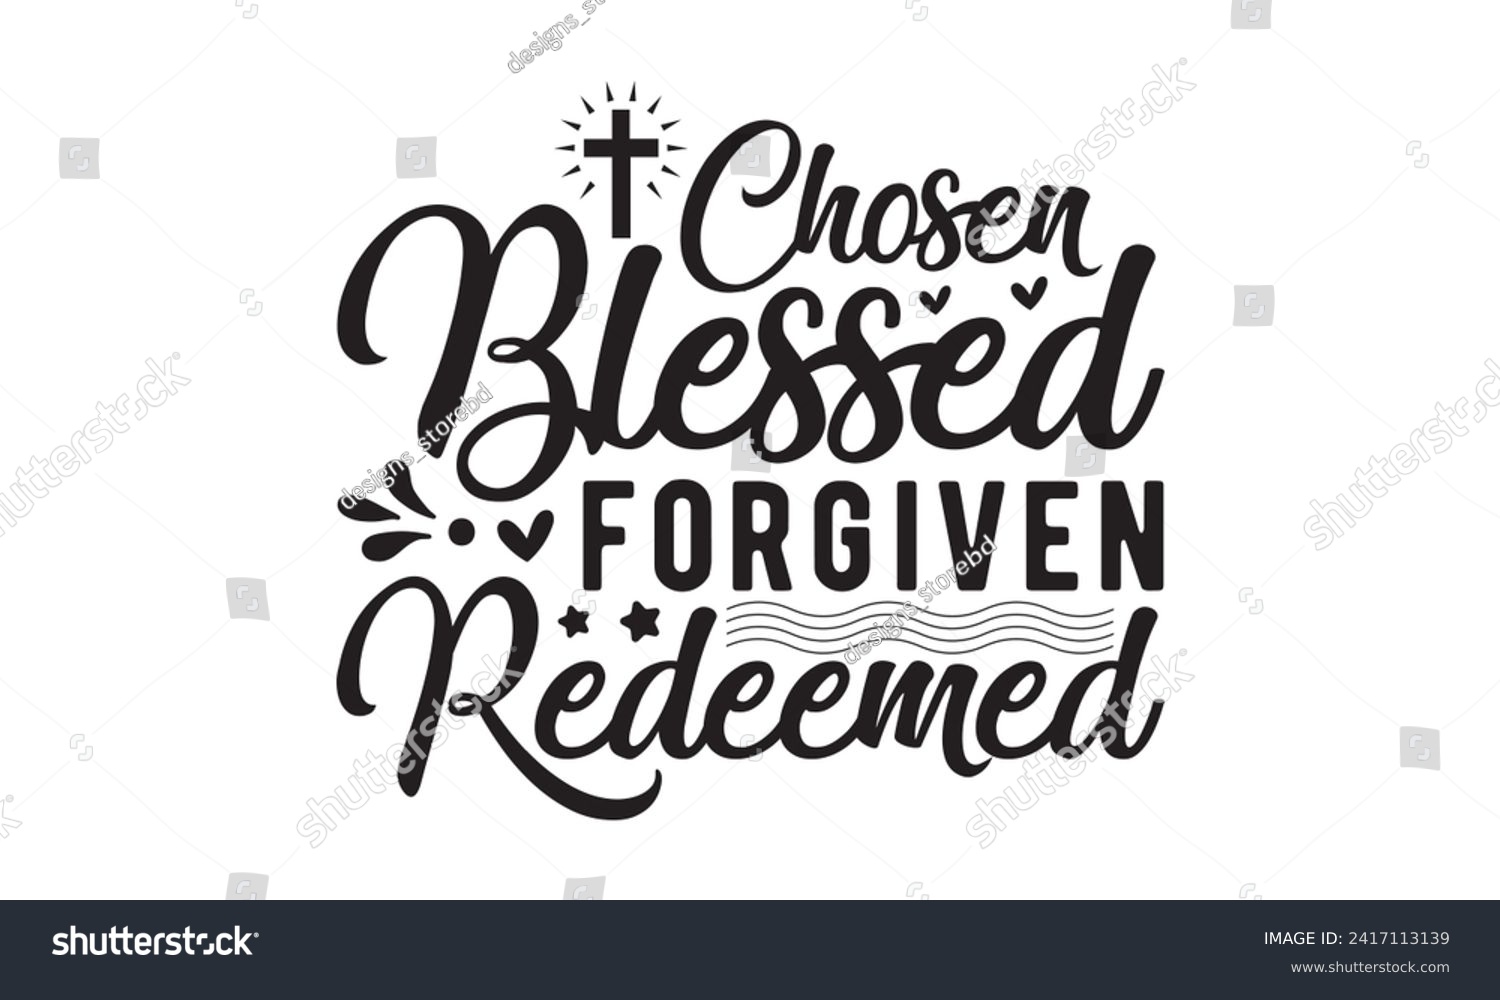 SVG of Chosen blessed forgiven redeemed,christian,jesus,Jesus Christian t-shirt design Bundle,Retro christian,funny christian,Printable Vector Illustration,Holiday,Cut Files Cricut,Silhouette,png svg